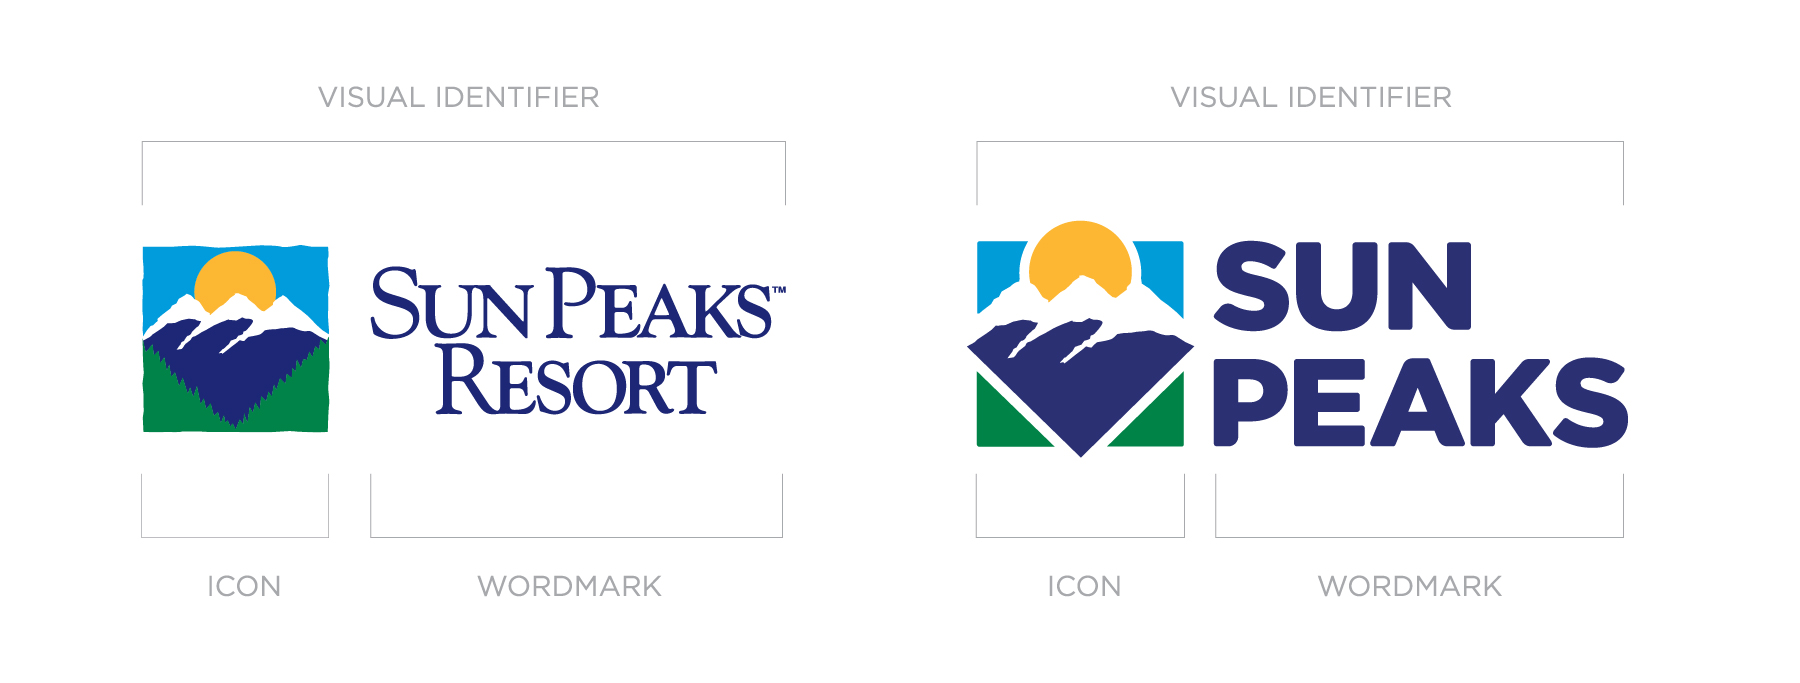 Sun Peaks Resort 2022 Visual Identity Update | Sun Peaks Resort